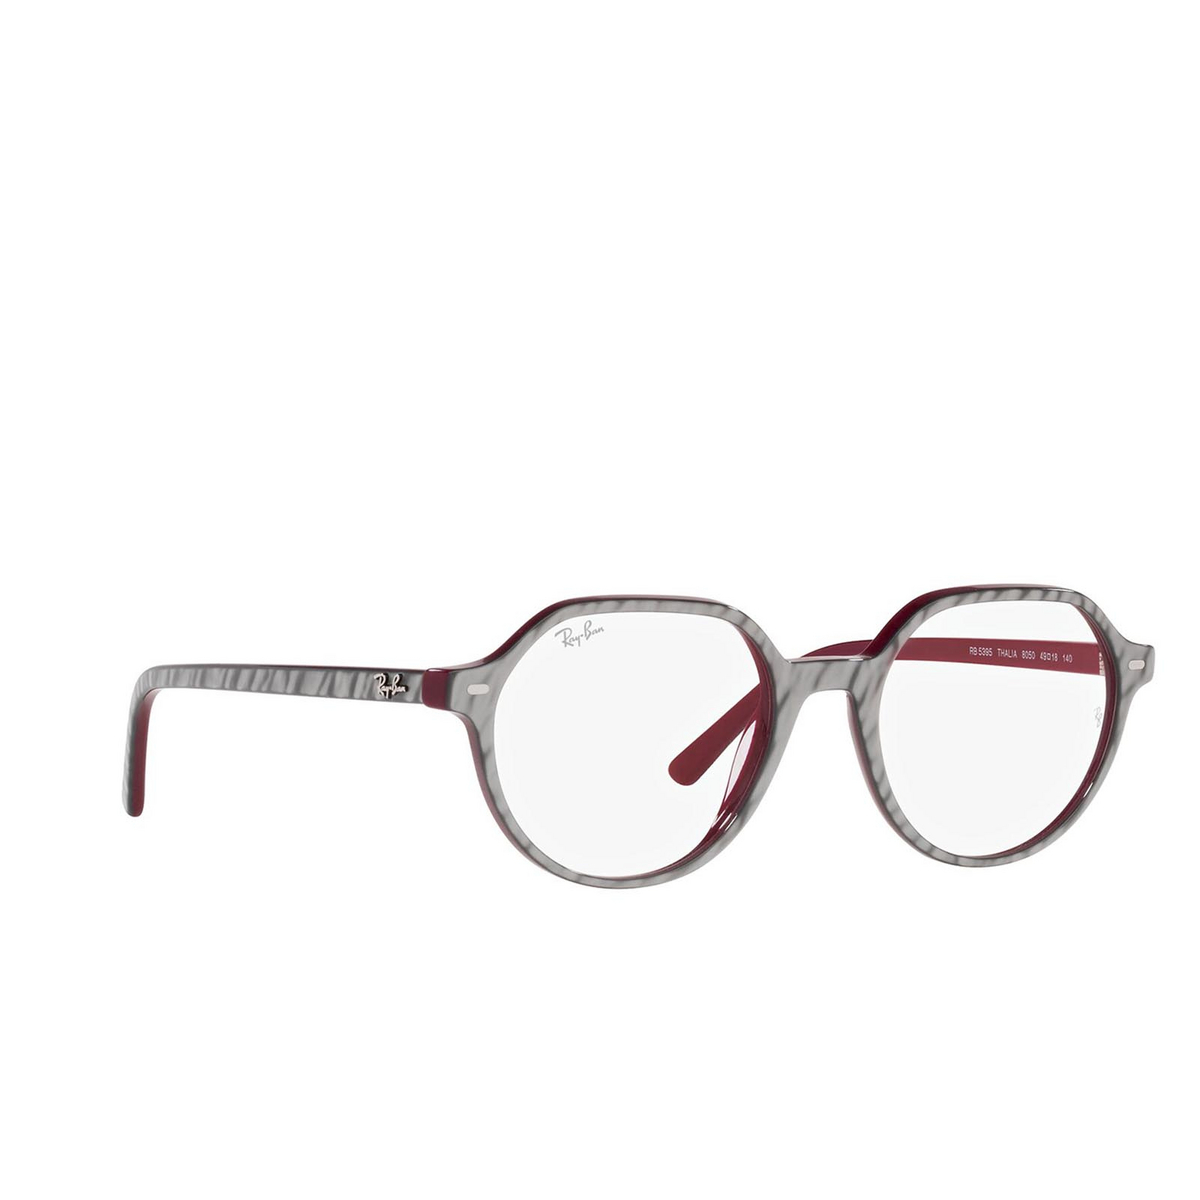 Ray-Ban THALIA Eyeglasses 8050 Wrinkled Grey on Bordeaux - three-quarters view